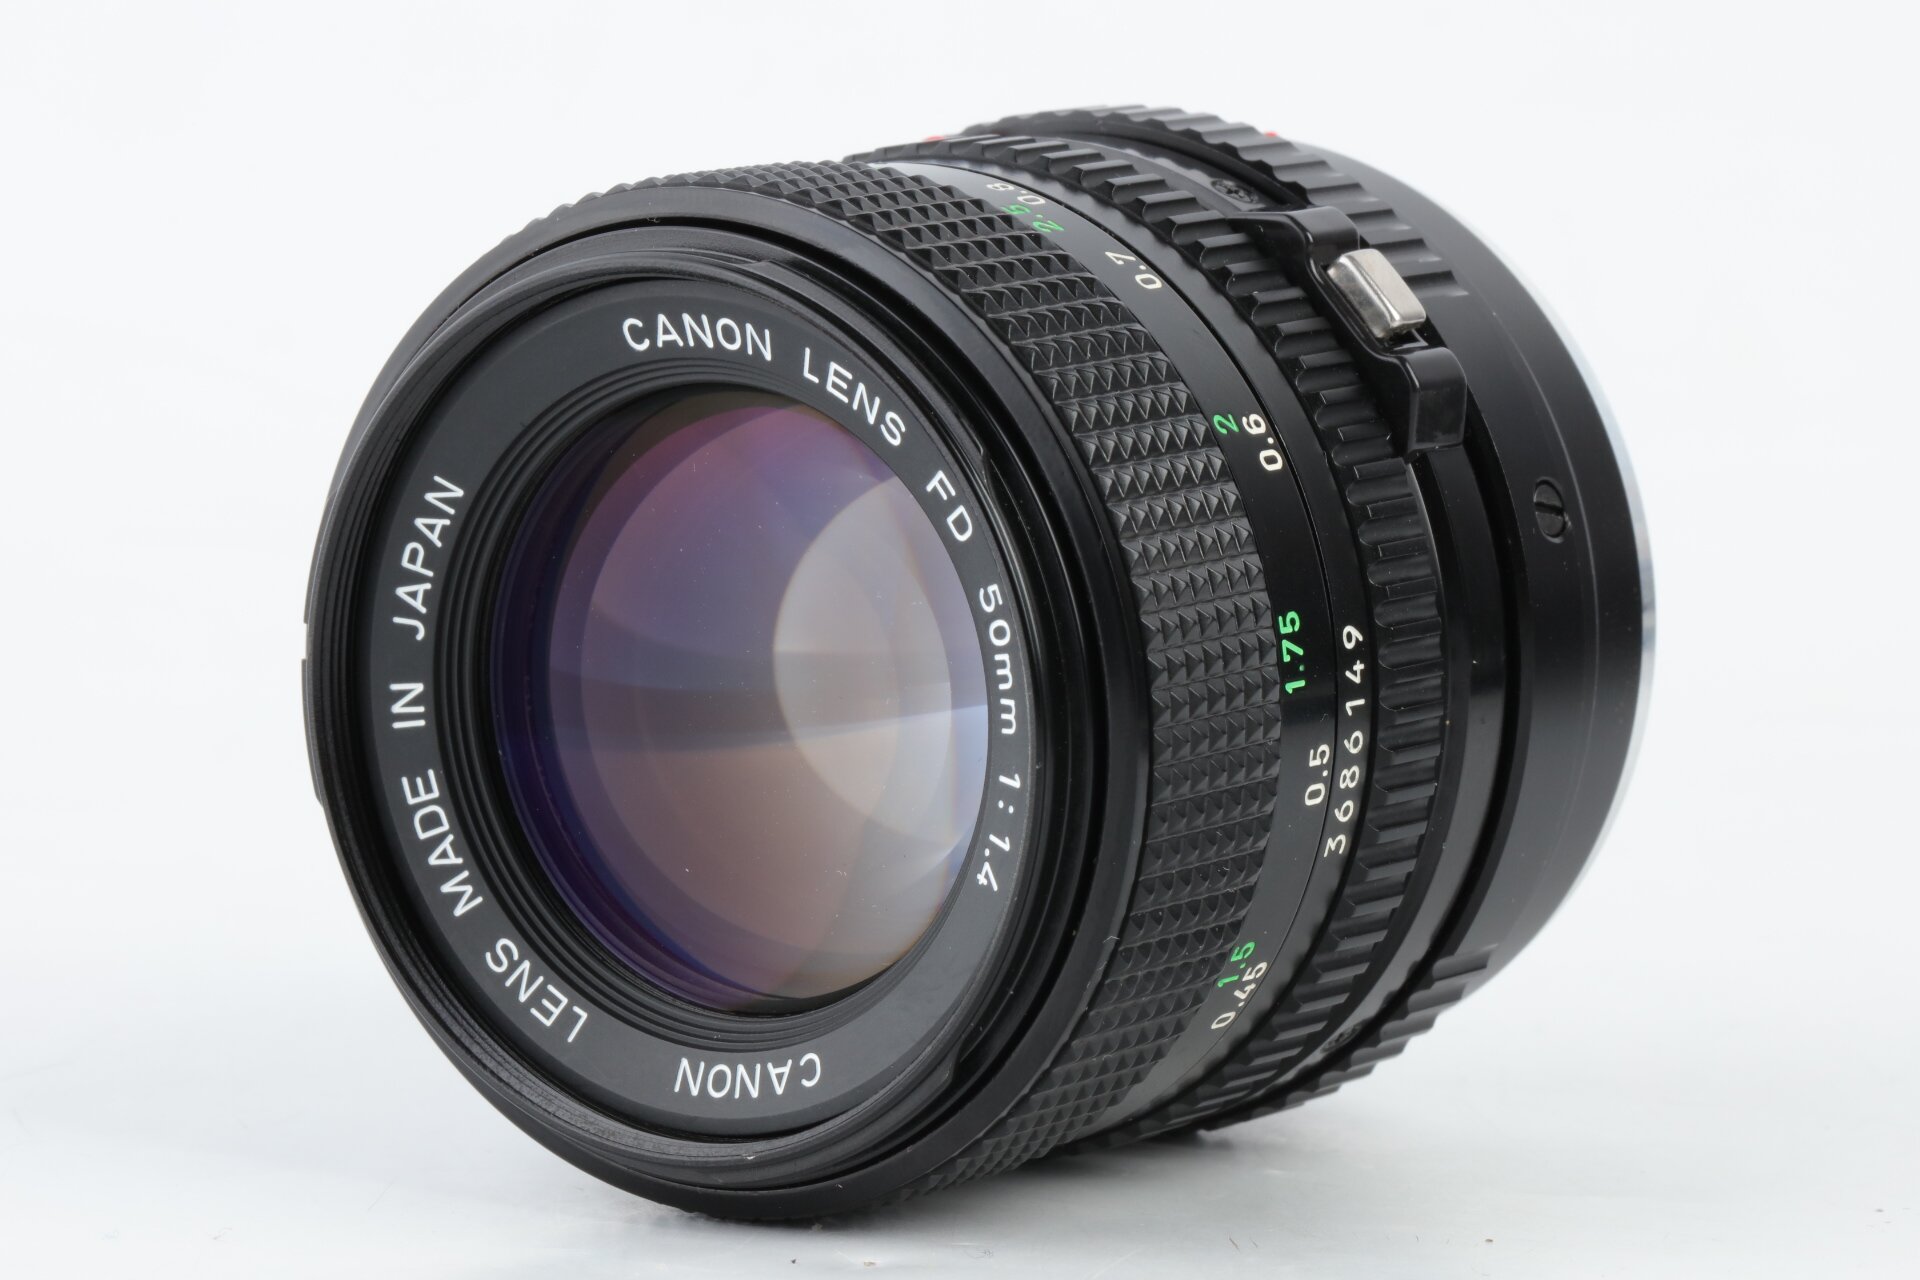 Canon FD 50mm 1,4 + K&F Concept Sony E-mount Nex Adapter